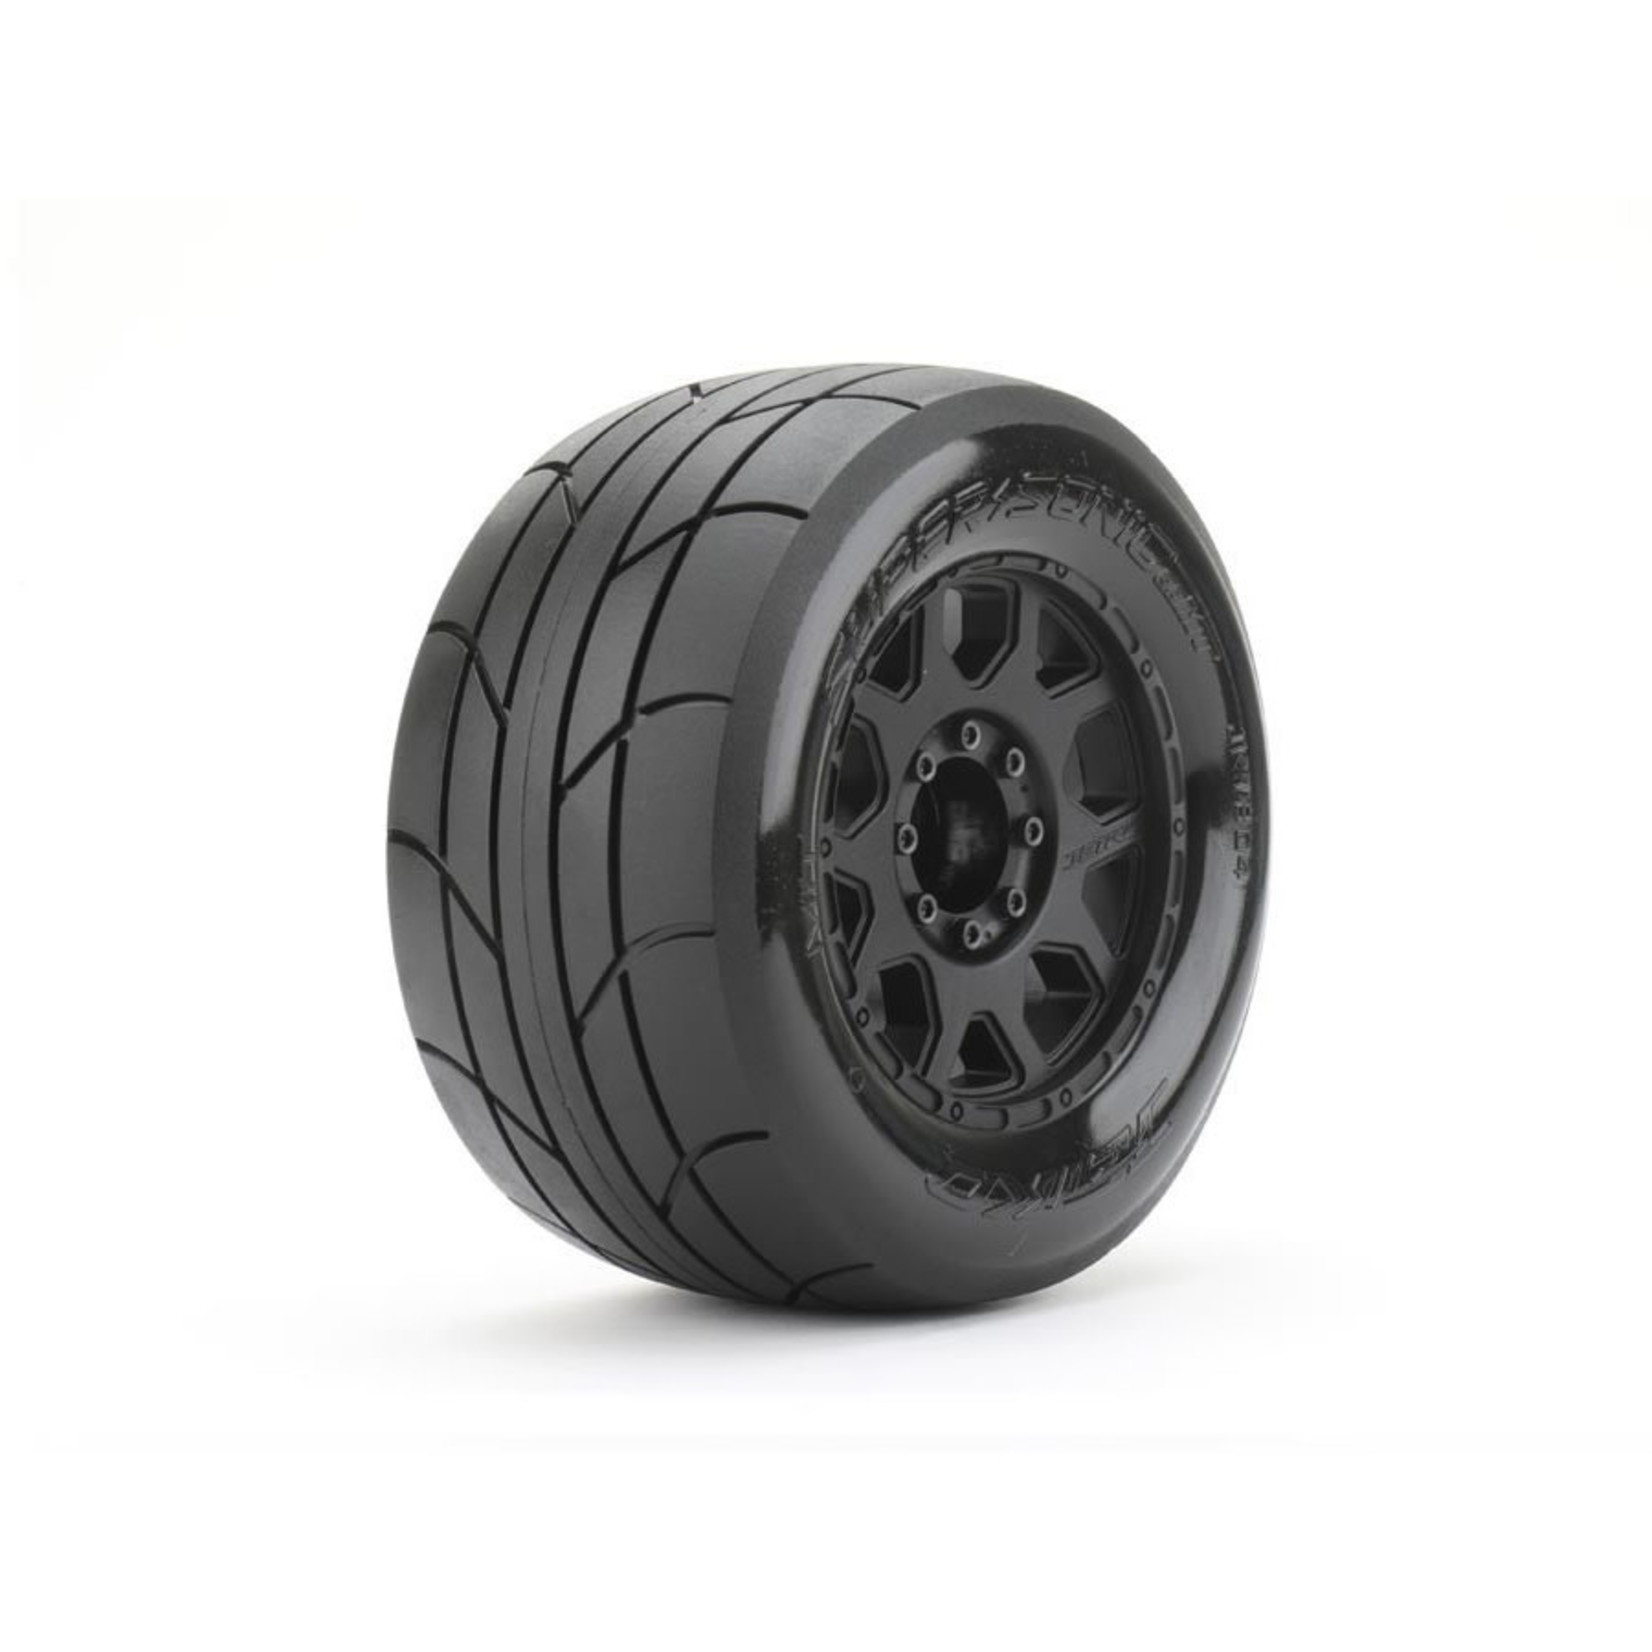 Jetko Tires Jetko Tires 1/8 MT 3.8" Super Sonic Tires Mounted on Black Claw Rims, Medium Soft, Belted, 17mm 1/2" Offset (2) #JKO1804CBMSGBB2